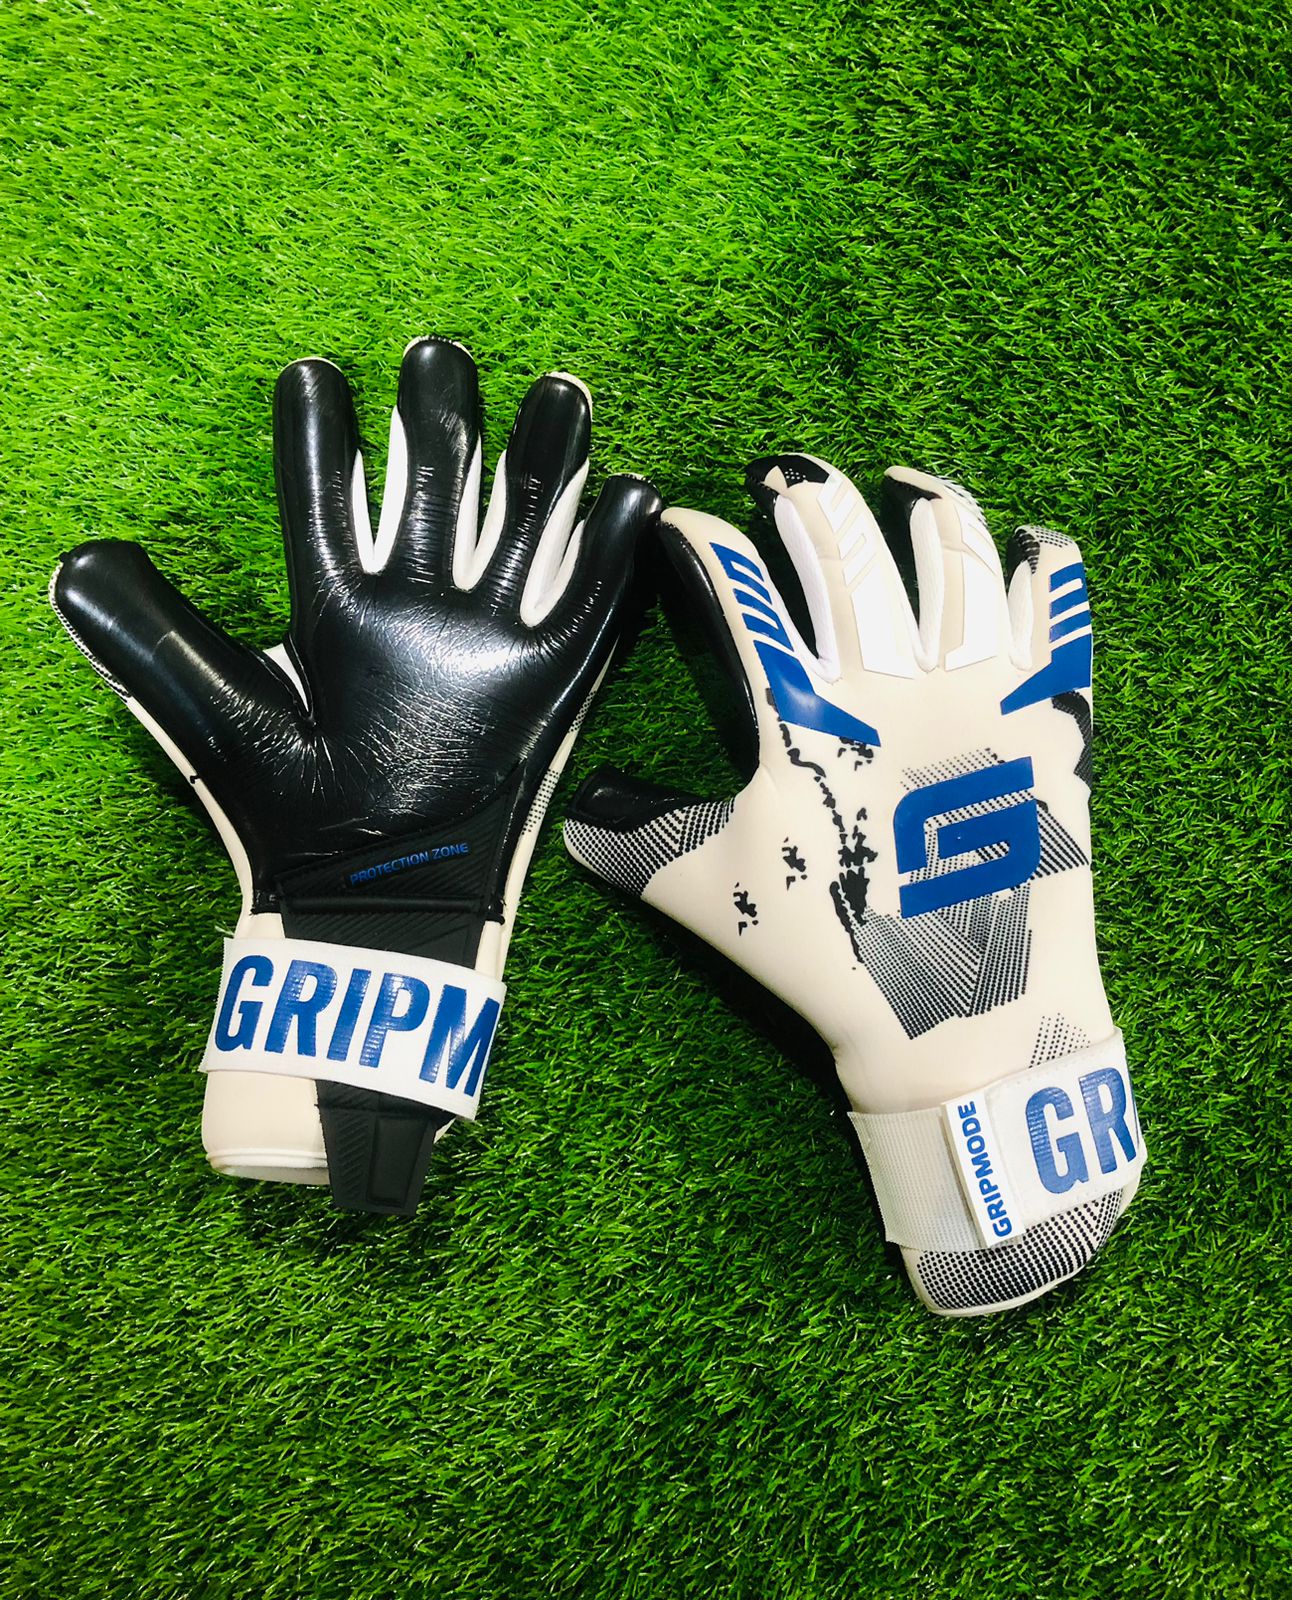 Gripmode professional Goalkeeper gloves